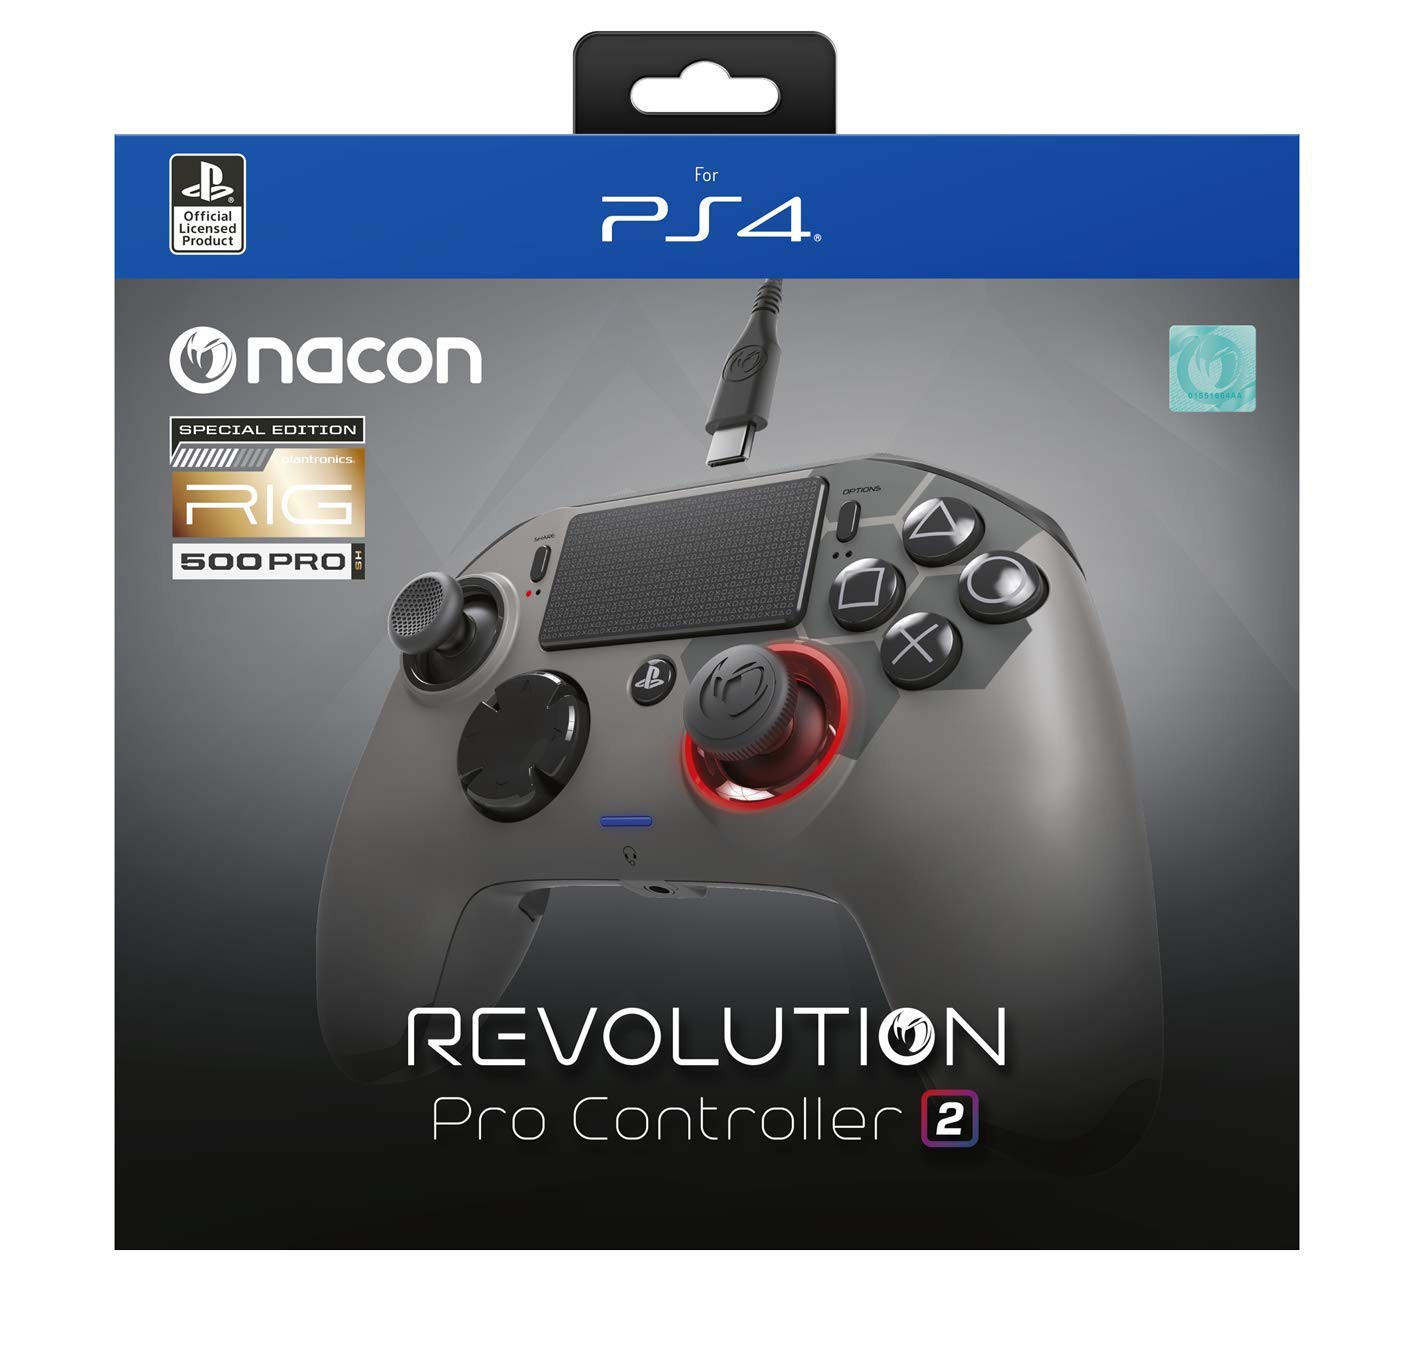 Nacon Revolution Pro Controller V2 RIG Edition for PS4